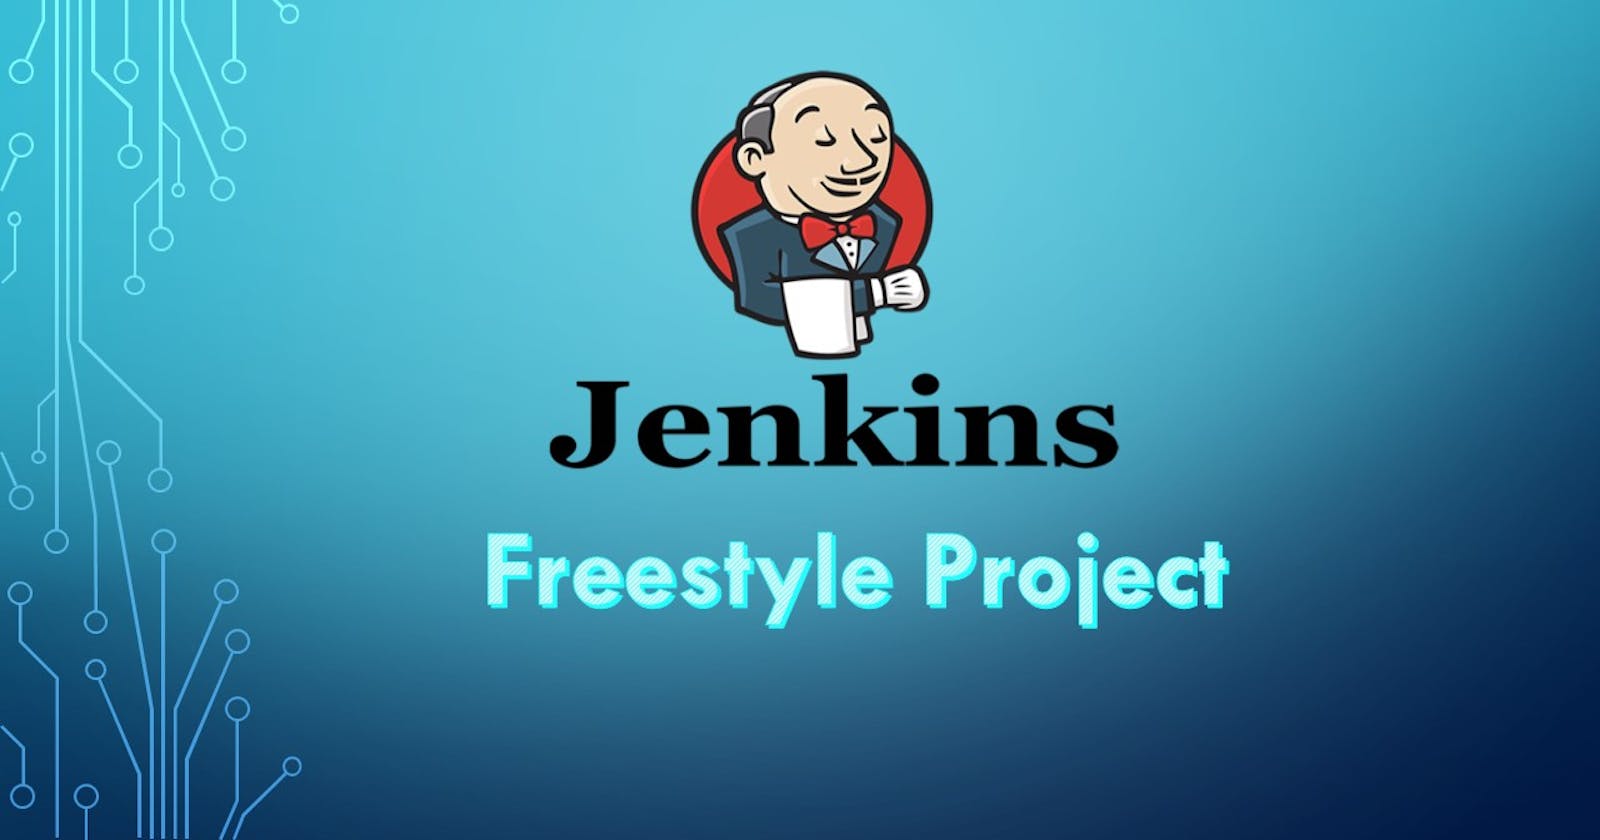 Jenkins Freestyle Project